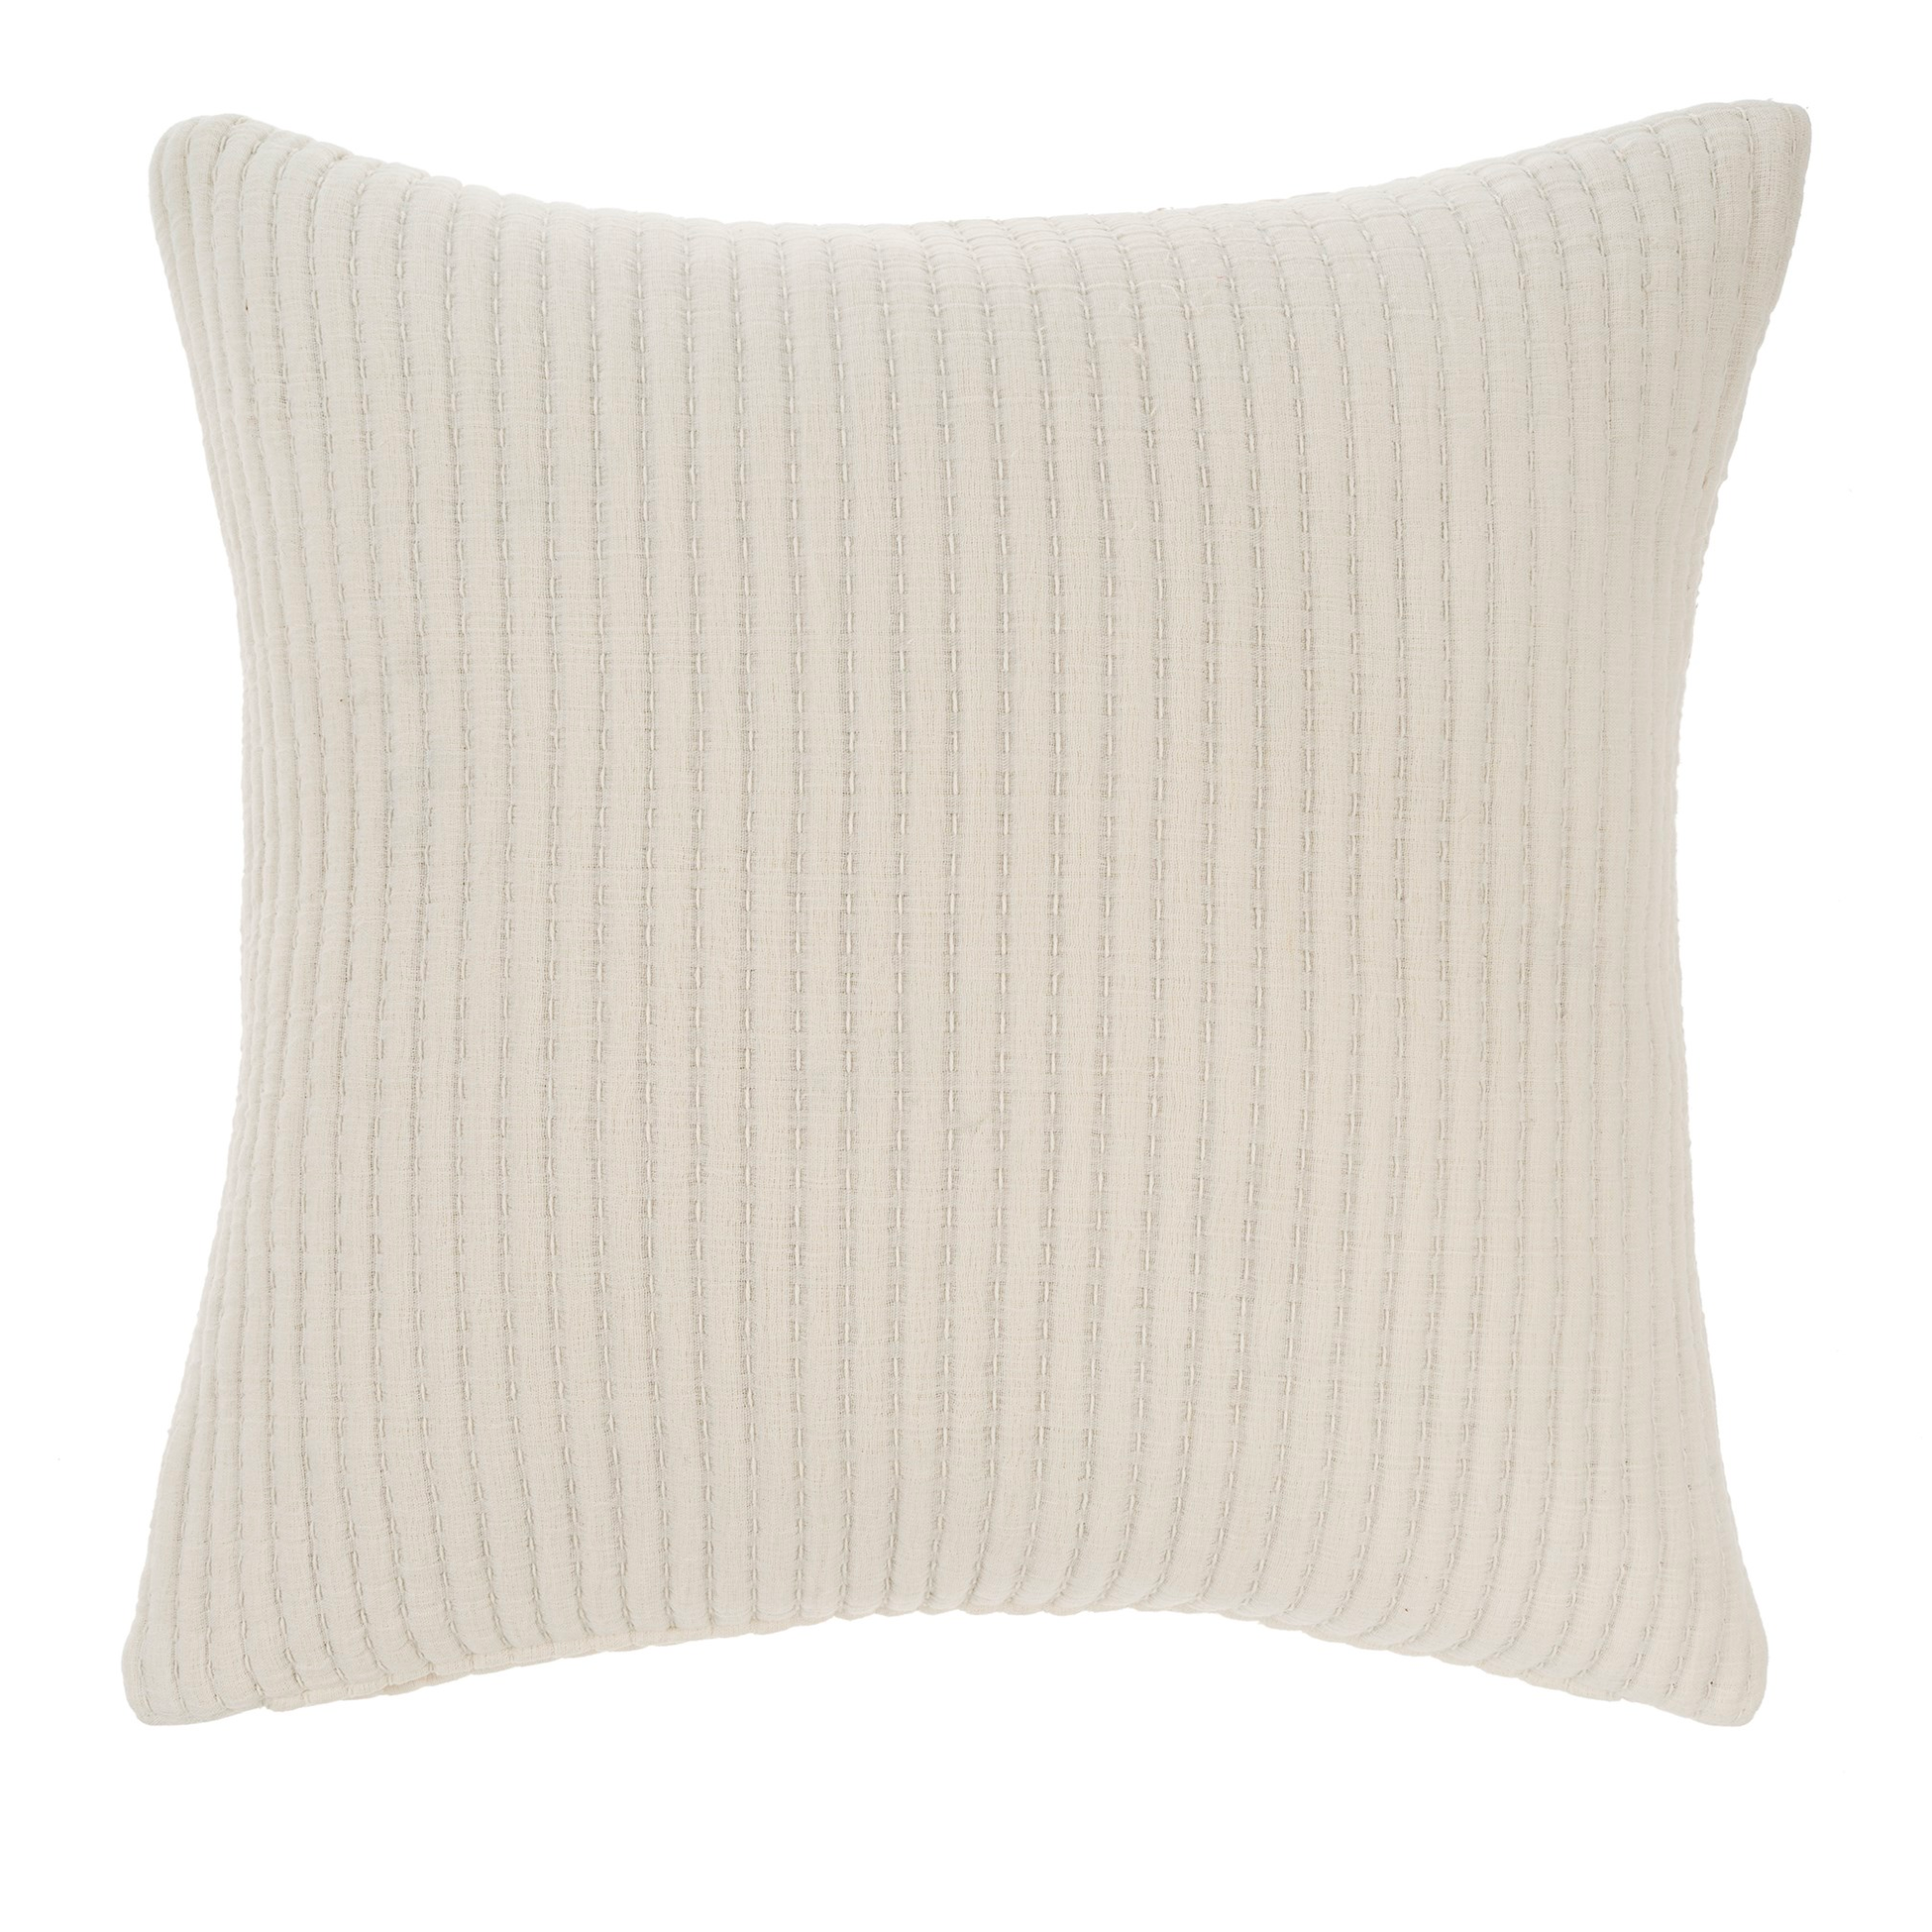 Karina Stitch Pillow - White